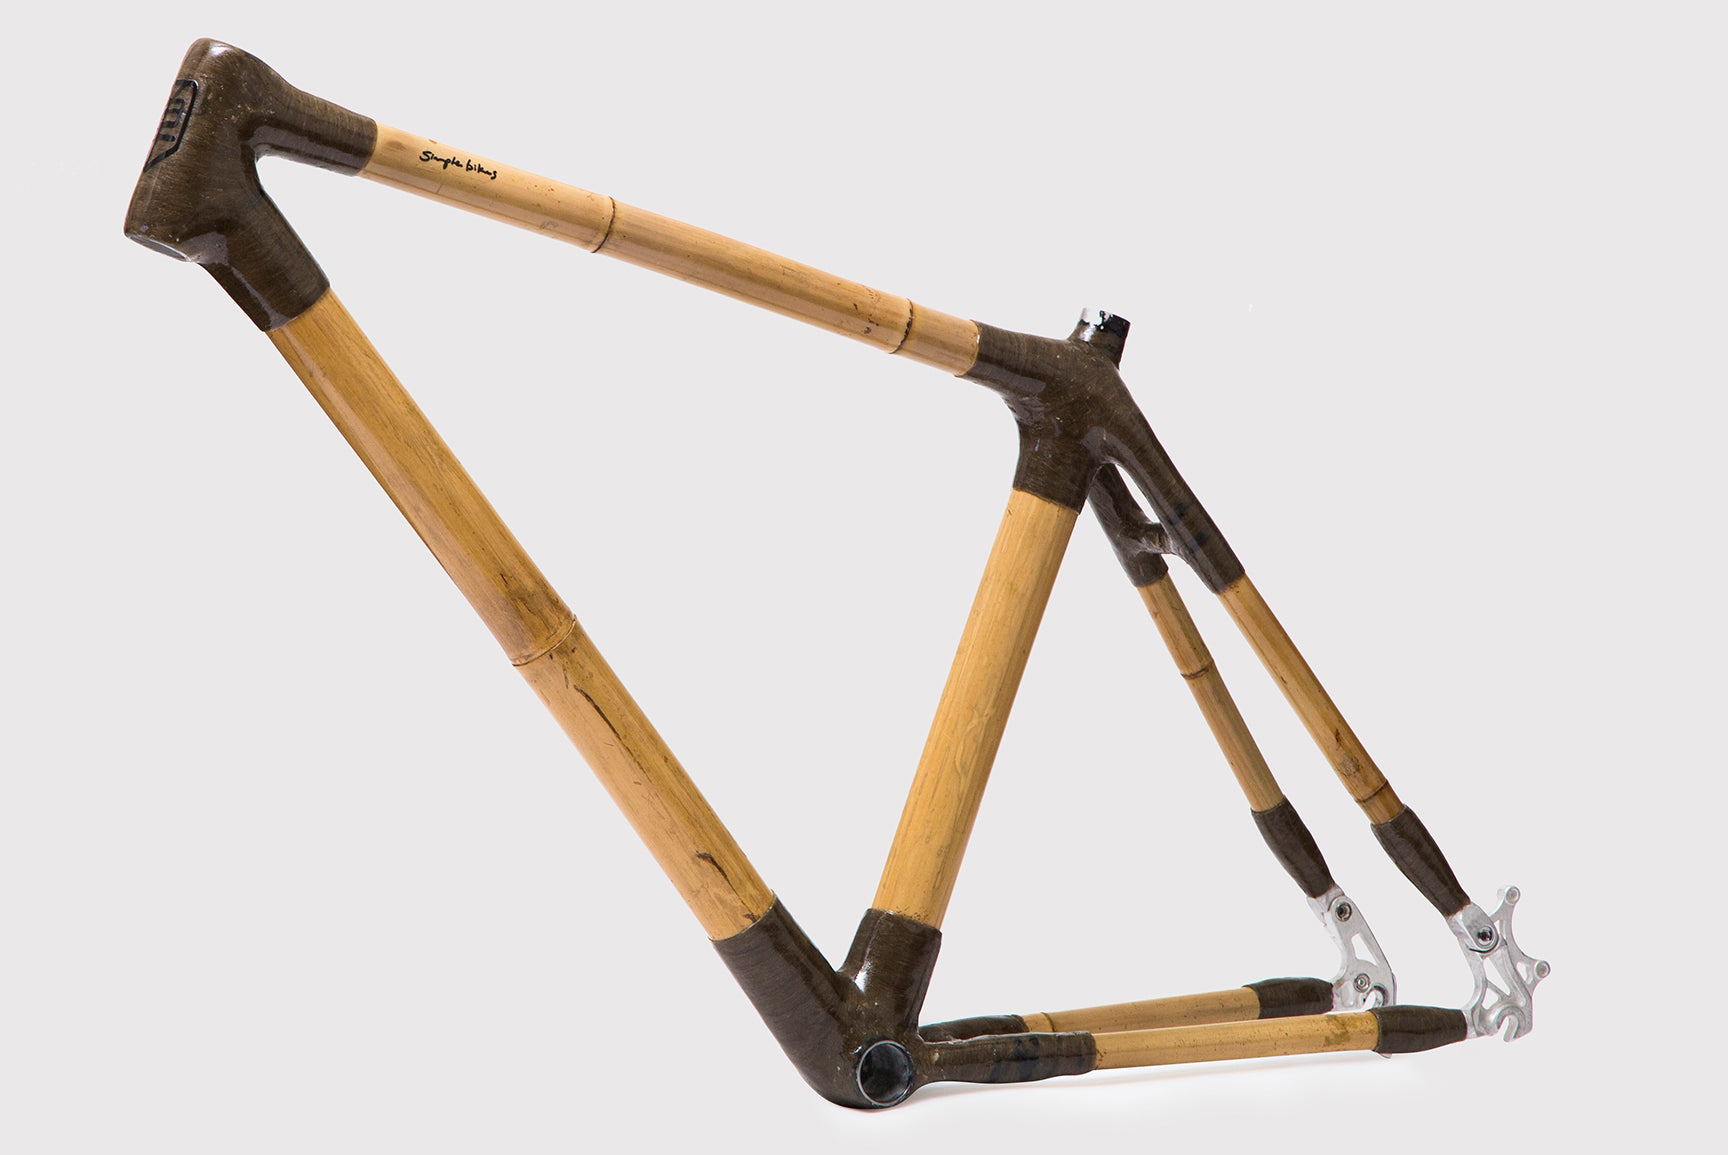 bamboo mountain bike